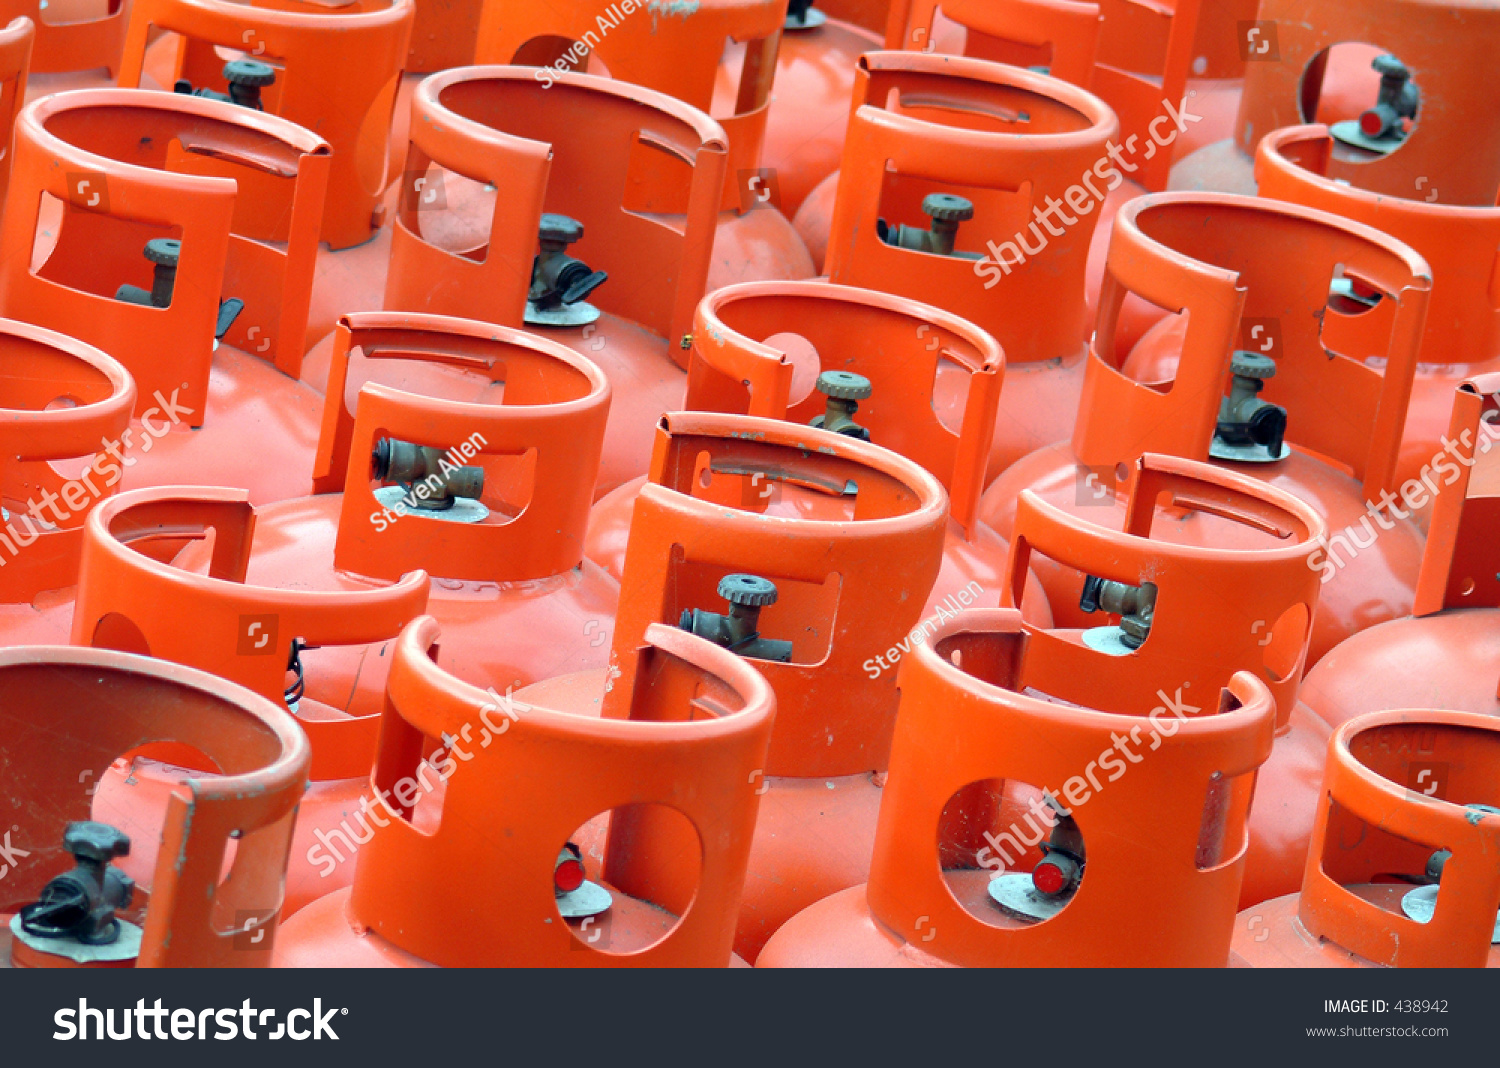 orange-gas-bottles-stock-photo-438942-shutterstock